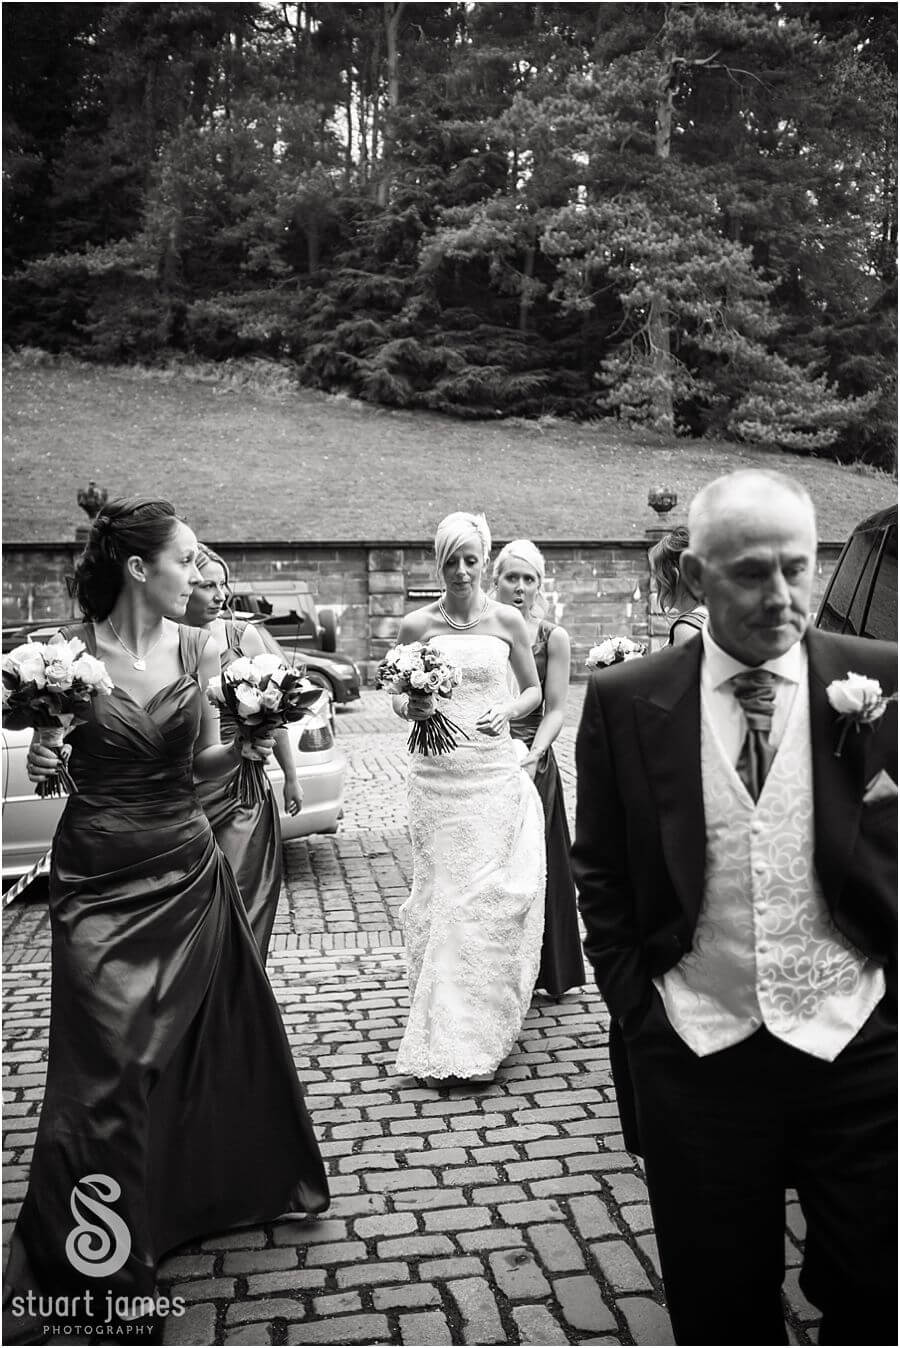 Elegant timeless wedding photographs at Keele Hall in Stoke by Stafford Wedding Photographer Stuart James